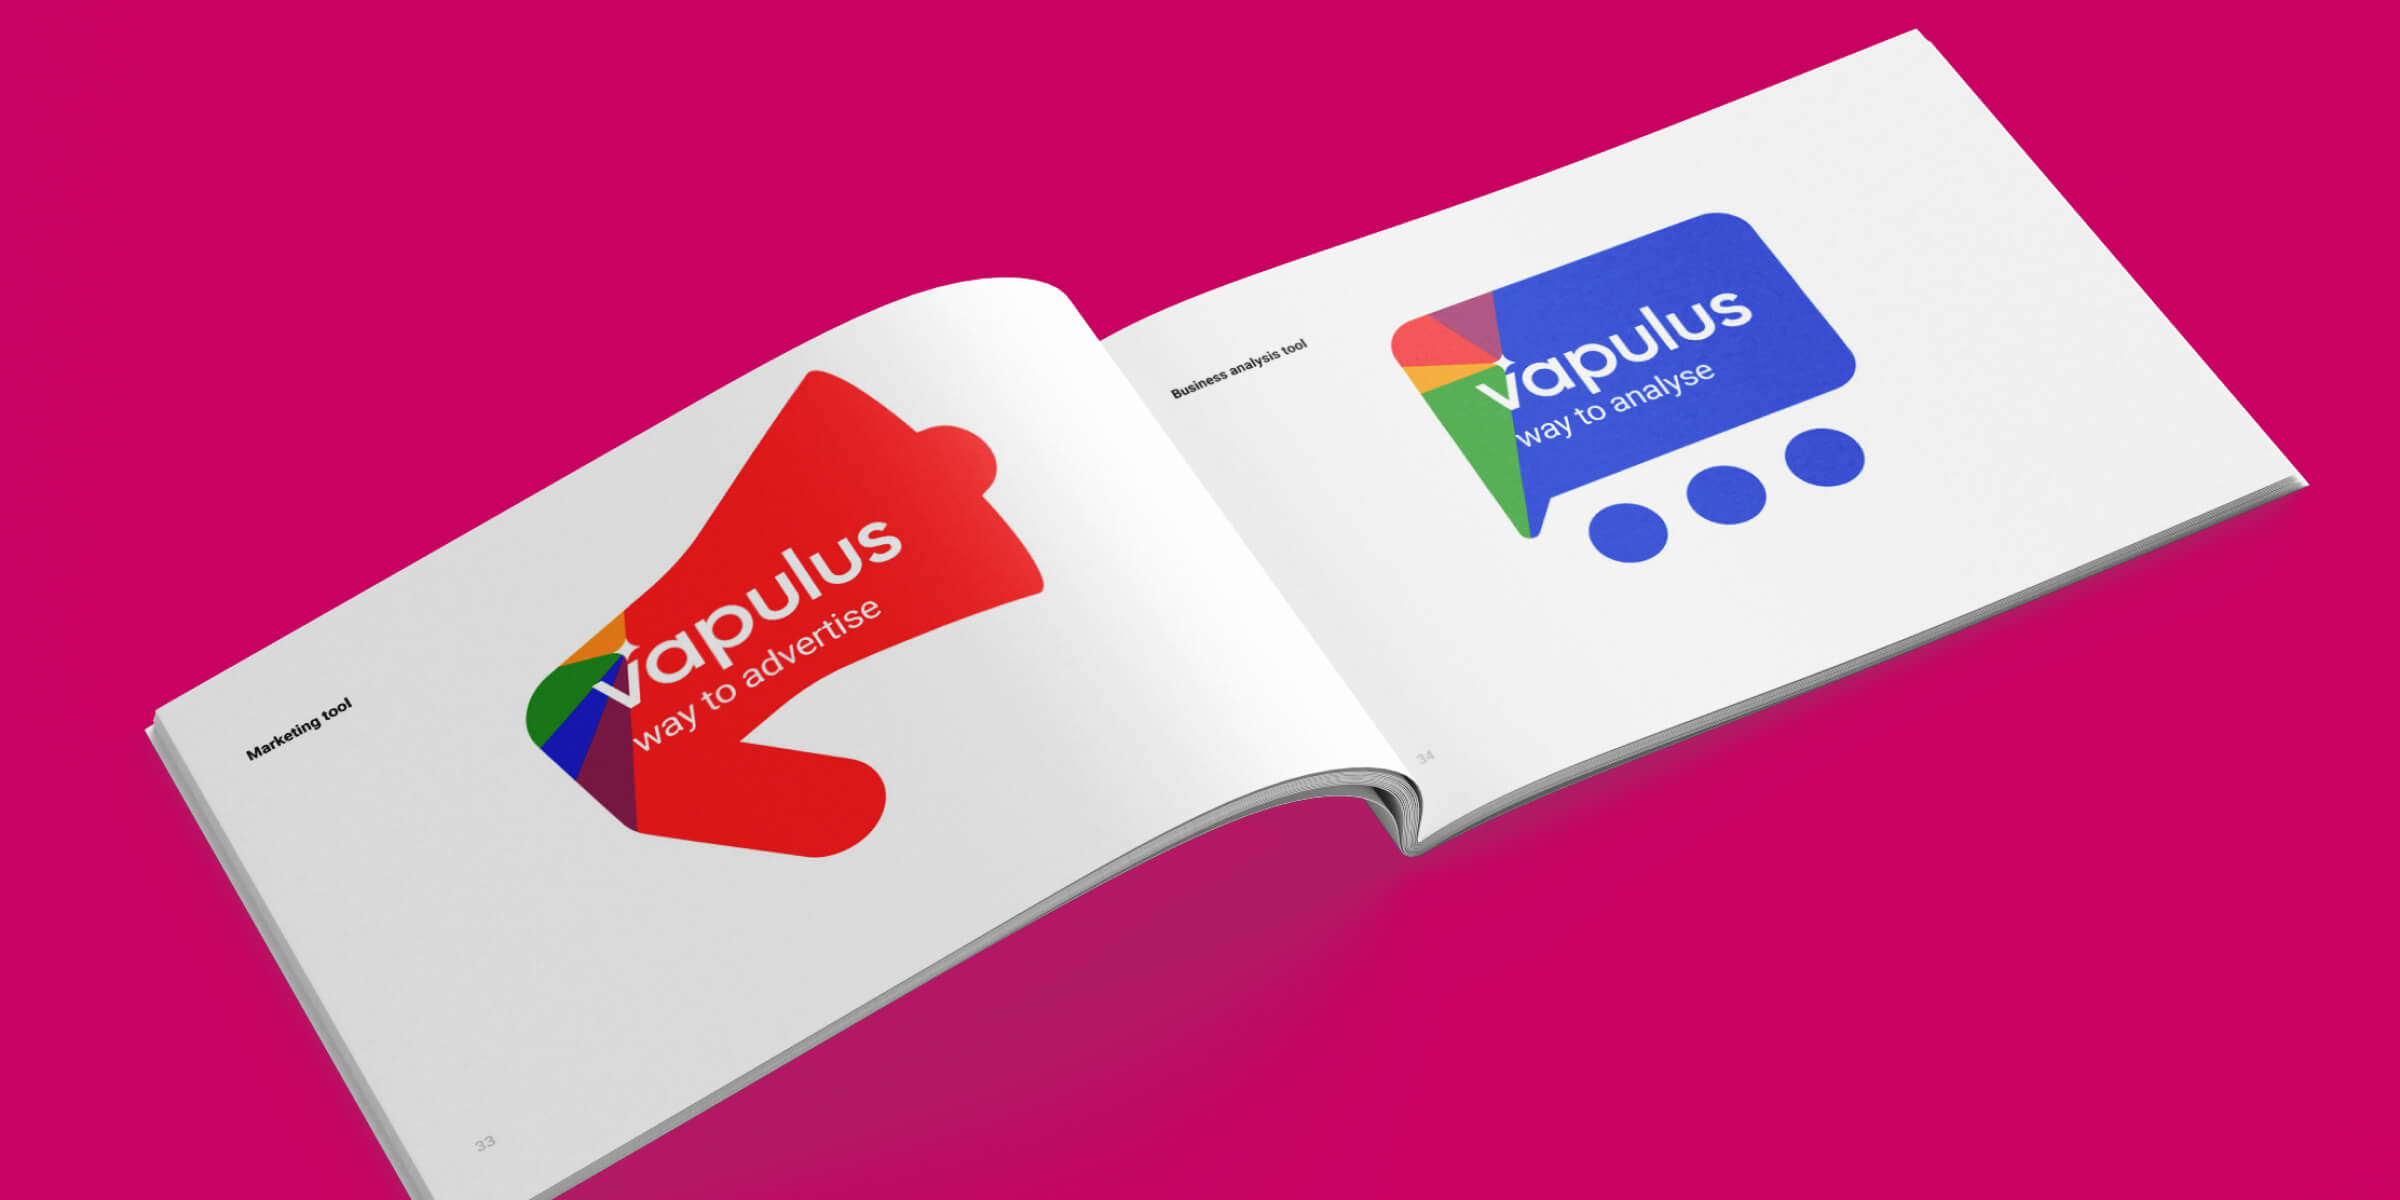 vapulus brand design image 3